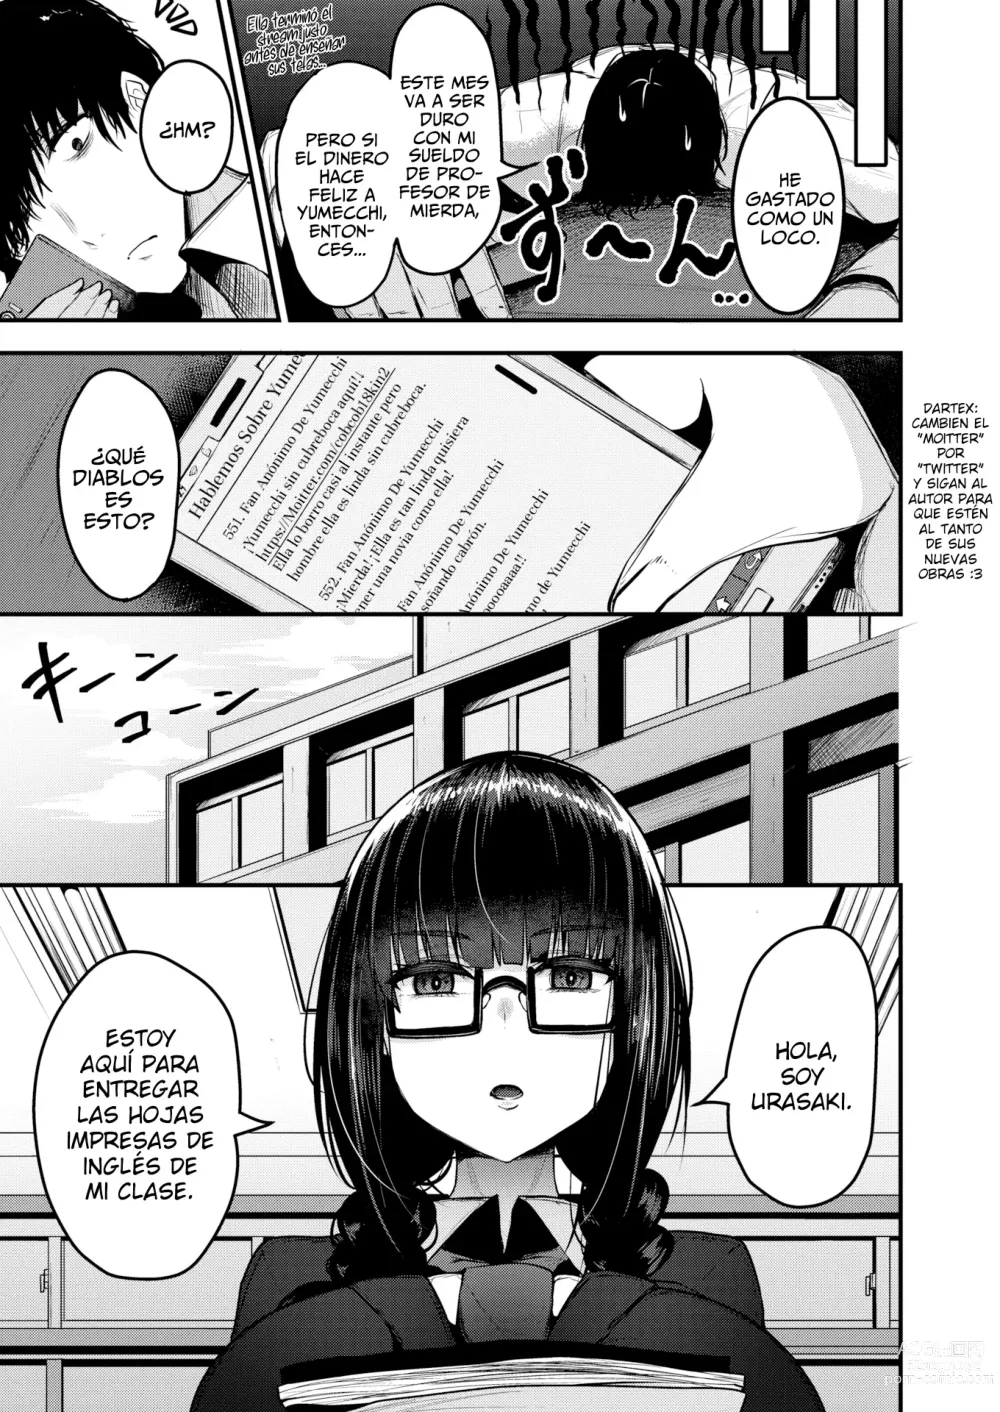 Page 3 of manga Yumecchi Livestream